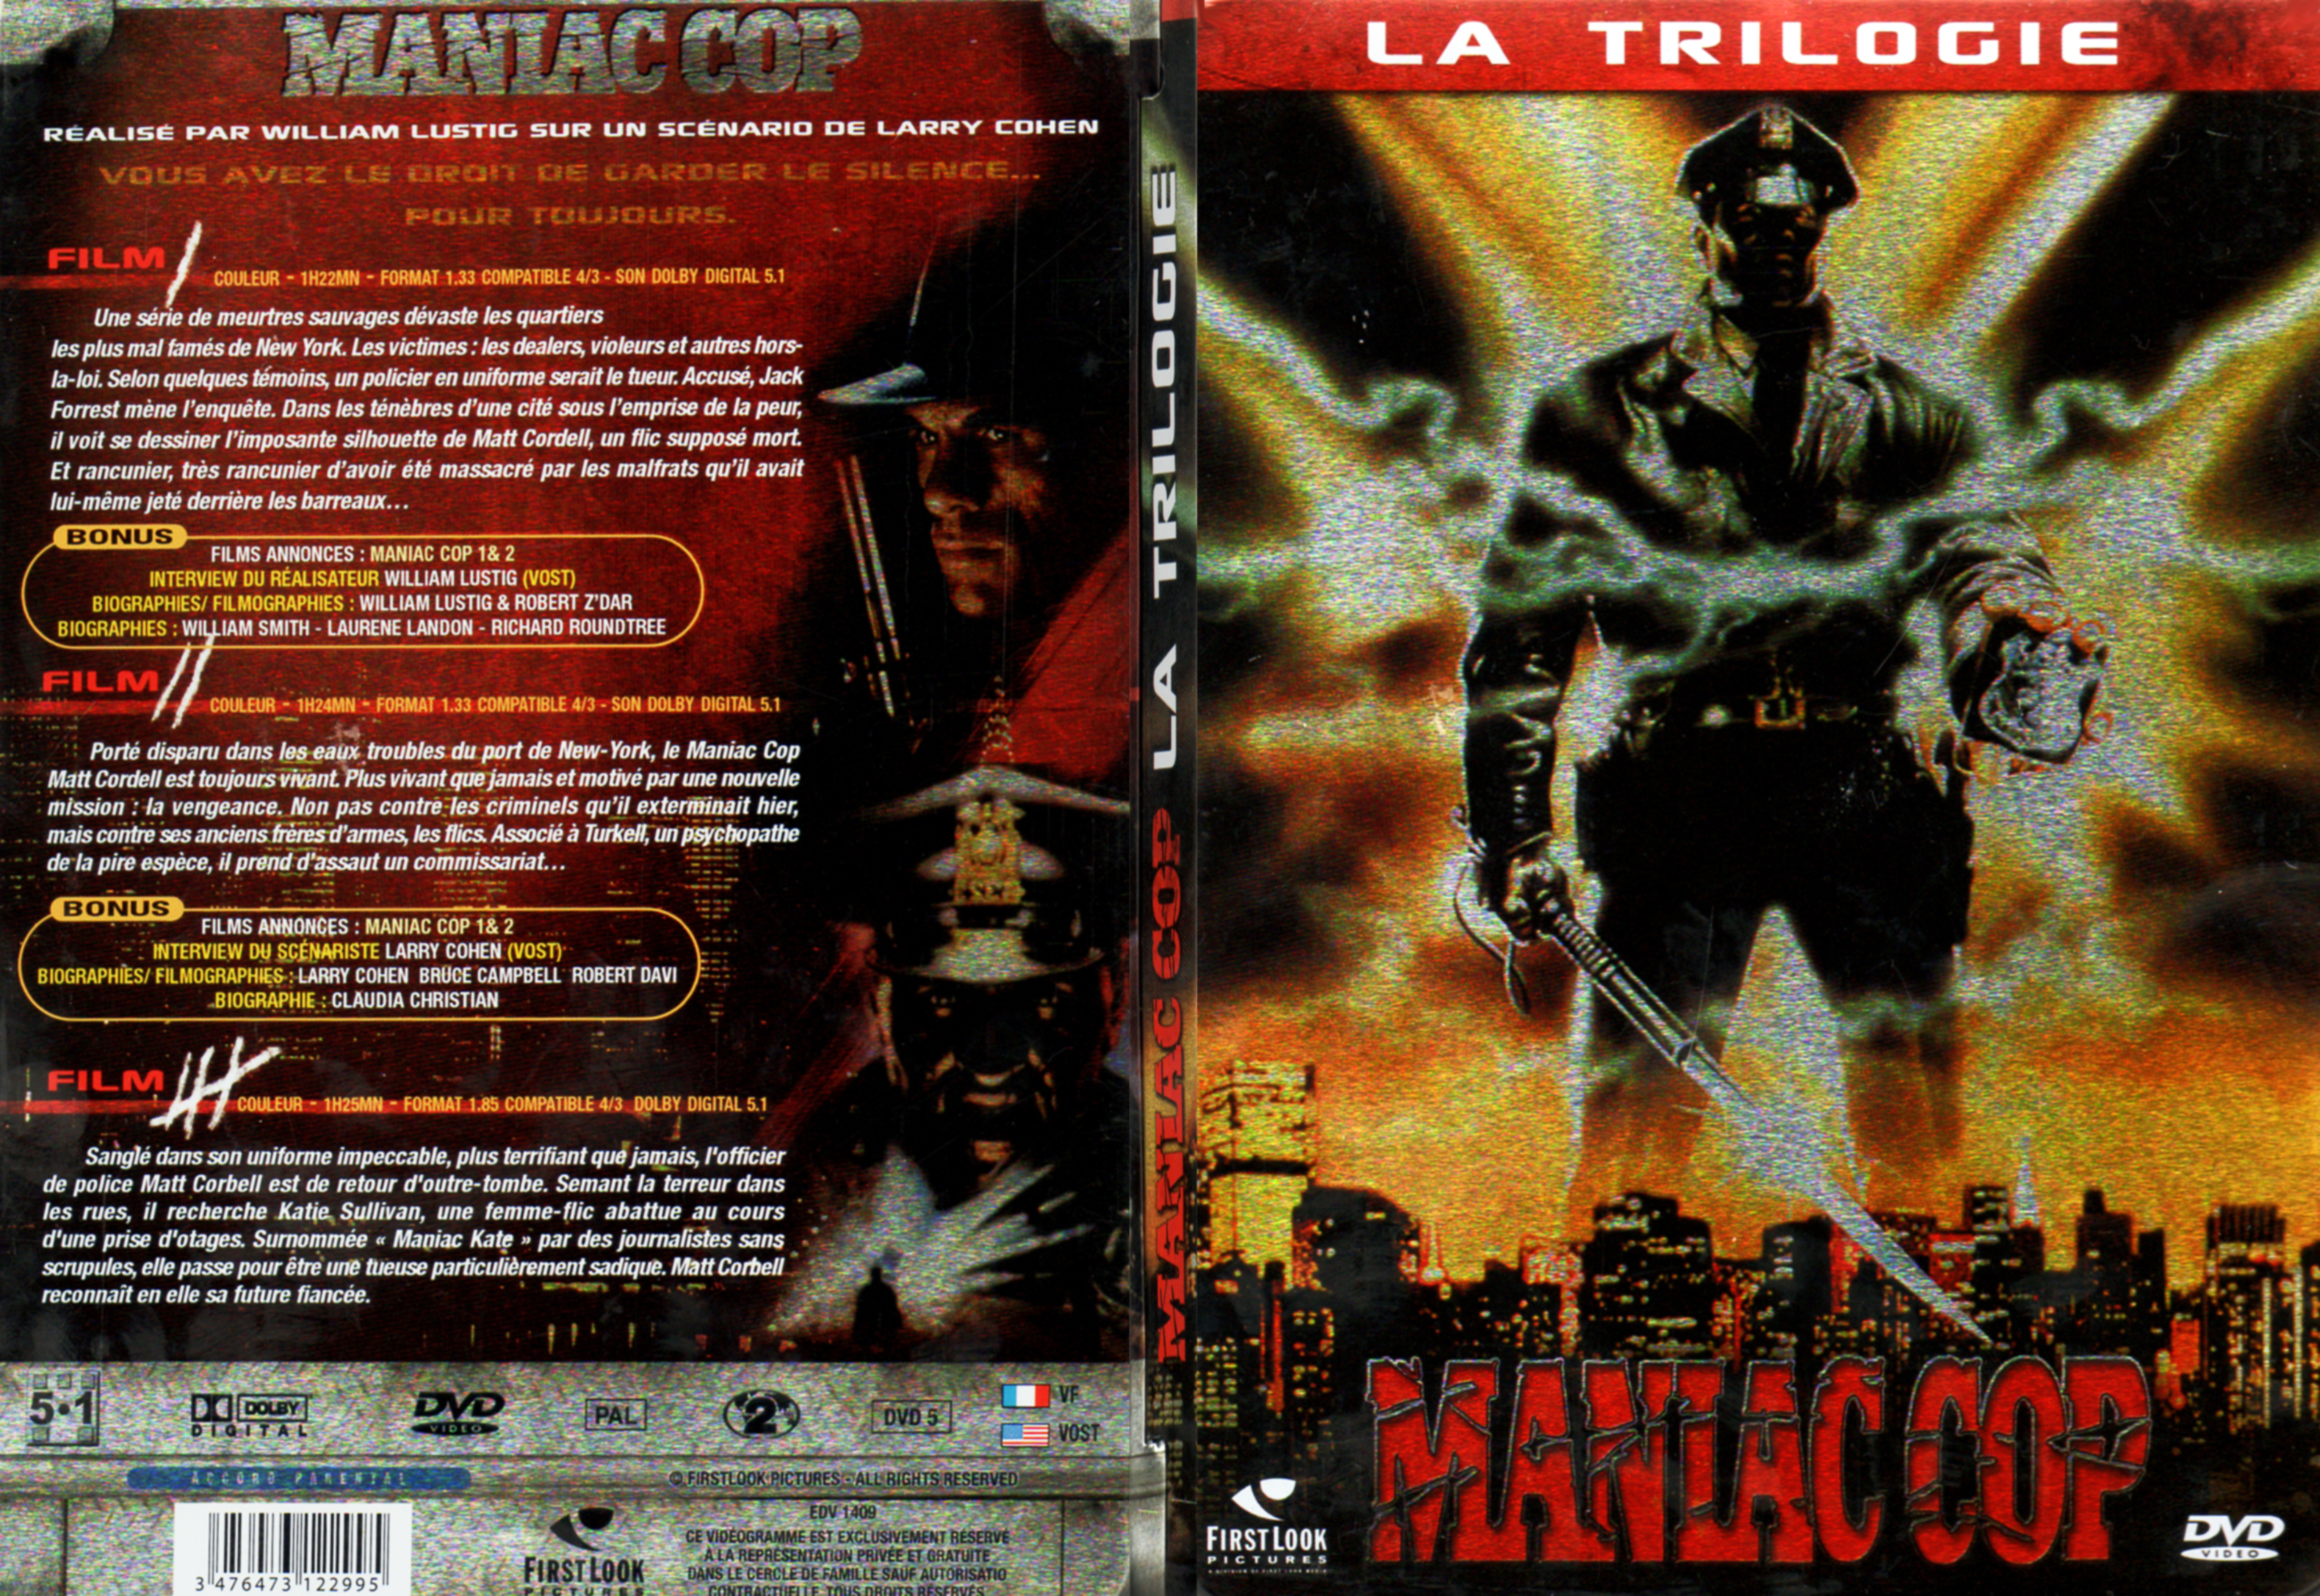 Jaquette DVD Maniac Cop Trilogie